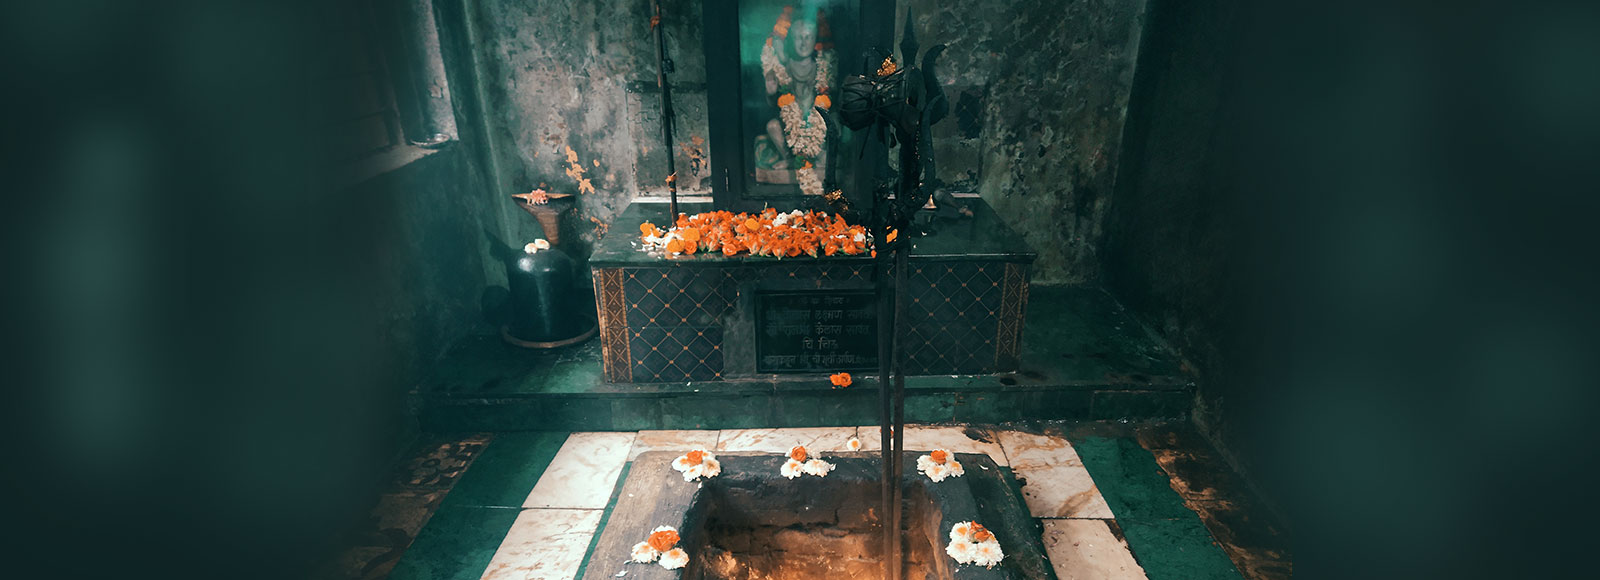 Shree Kshetra Bhimashankar Sansthan – Bhimashankar temple is one of the  well known Jyotirlinga